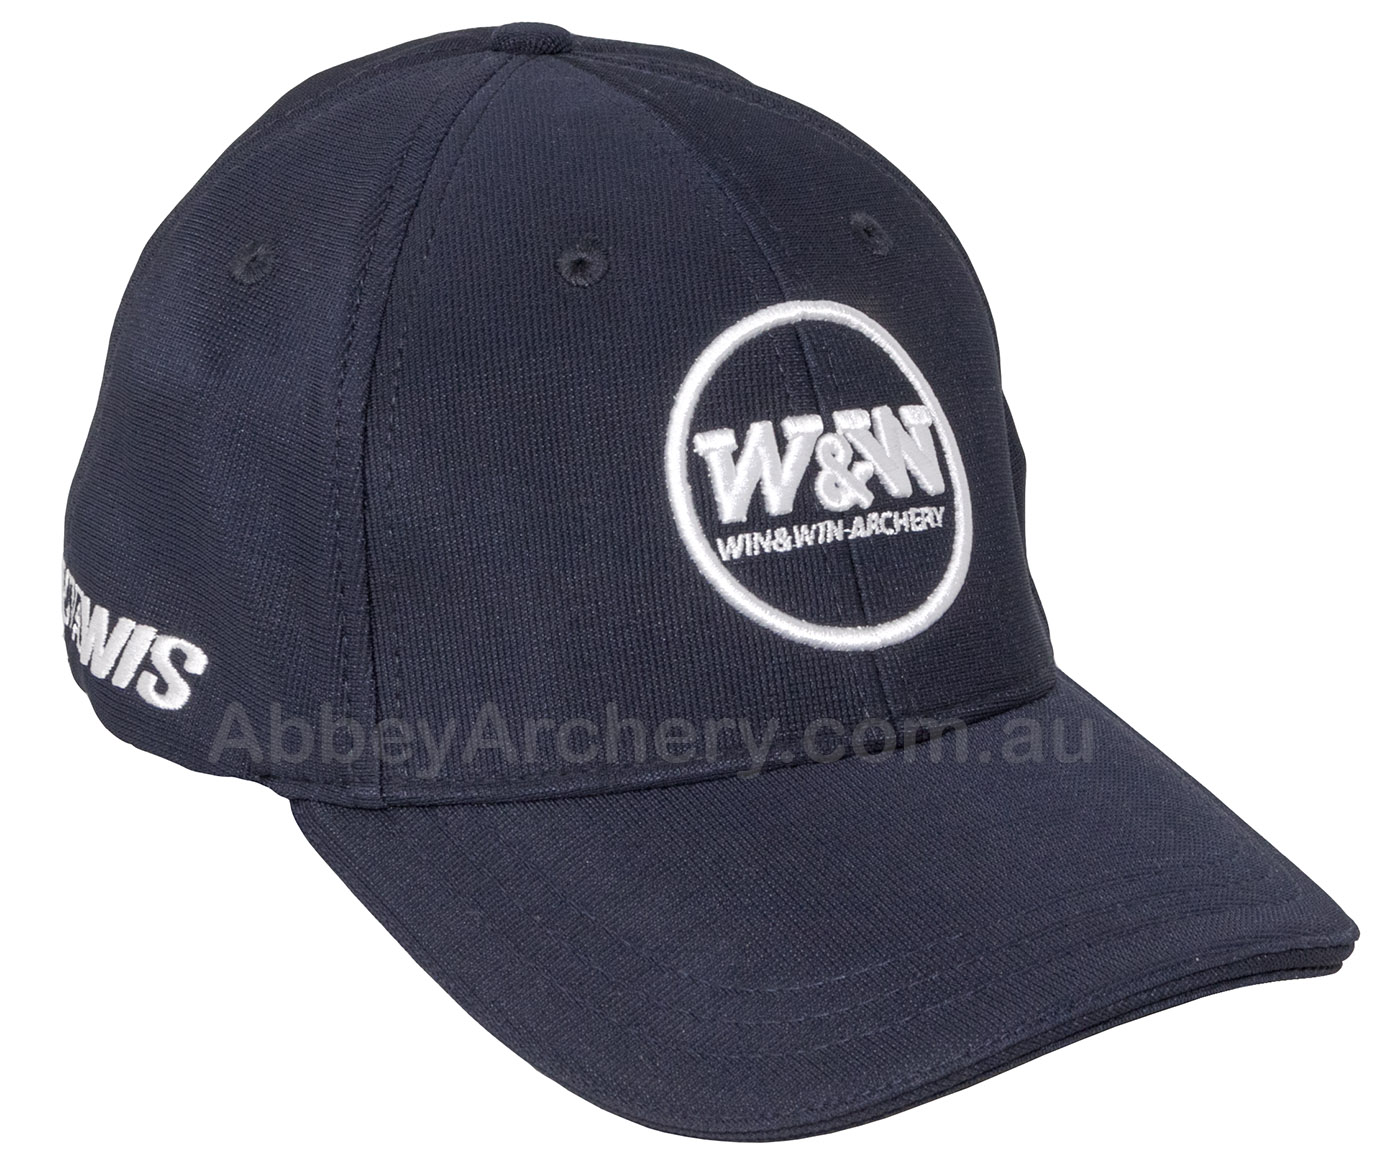 Win & Win Wiawis navy blue cap large image. Click to return to Win & Win Wiawis navy blue cap price and description